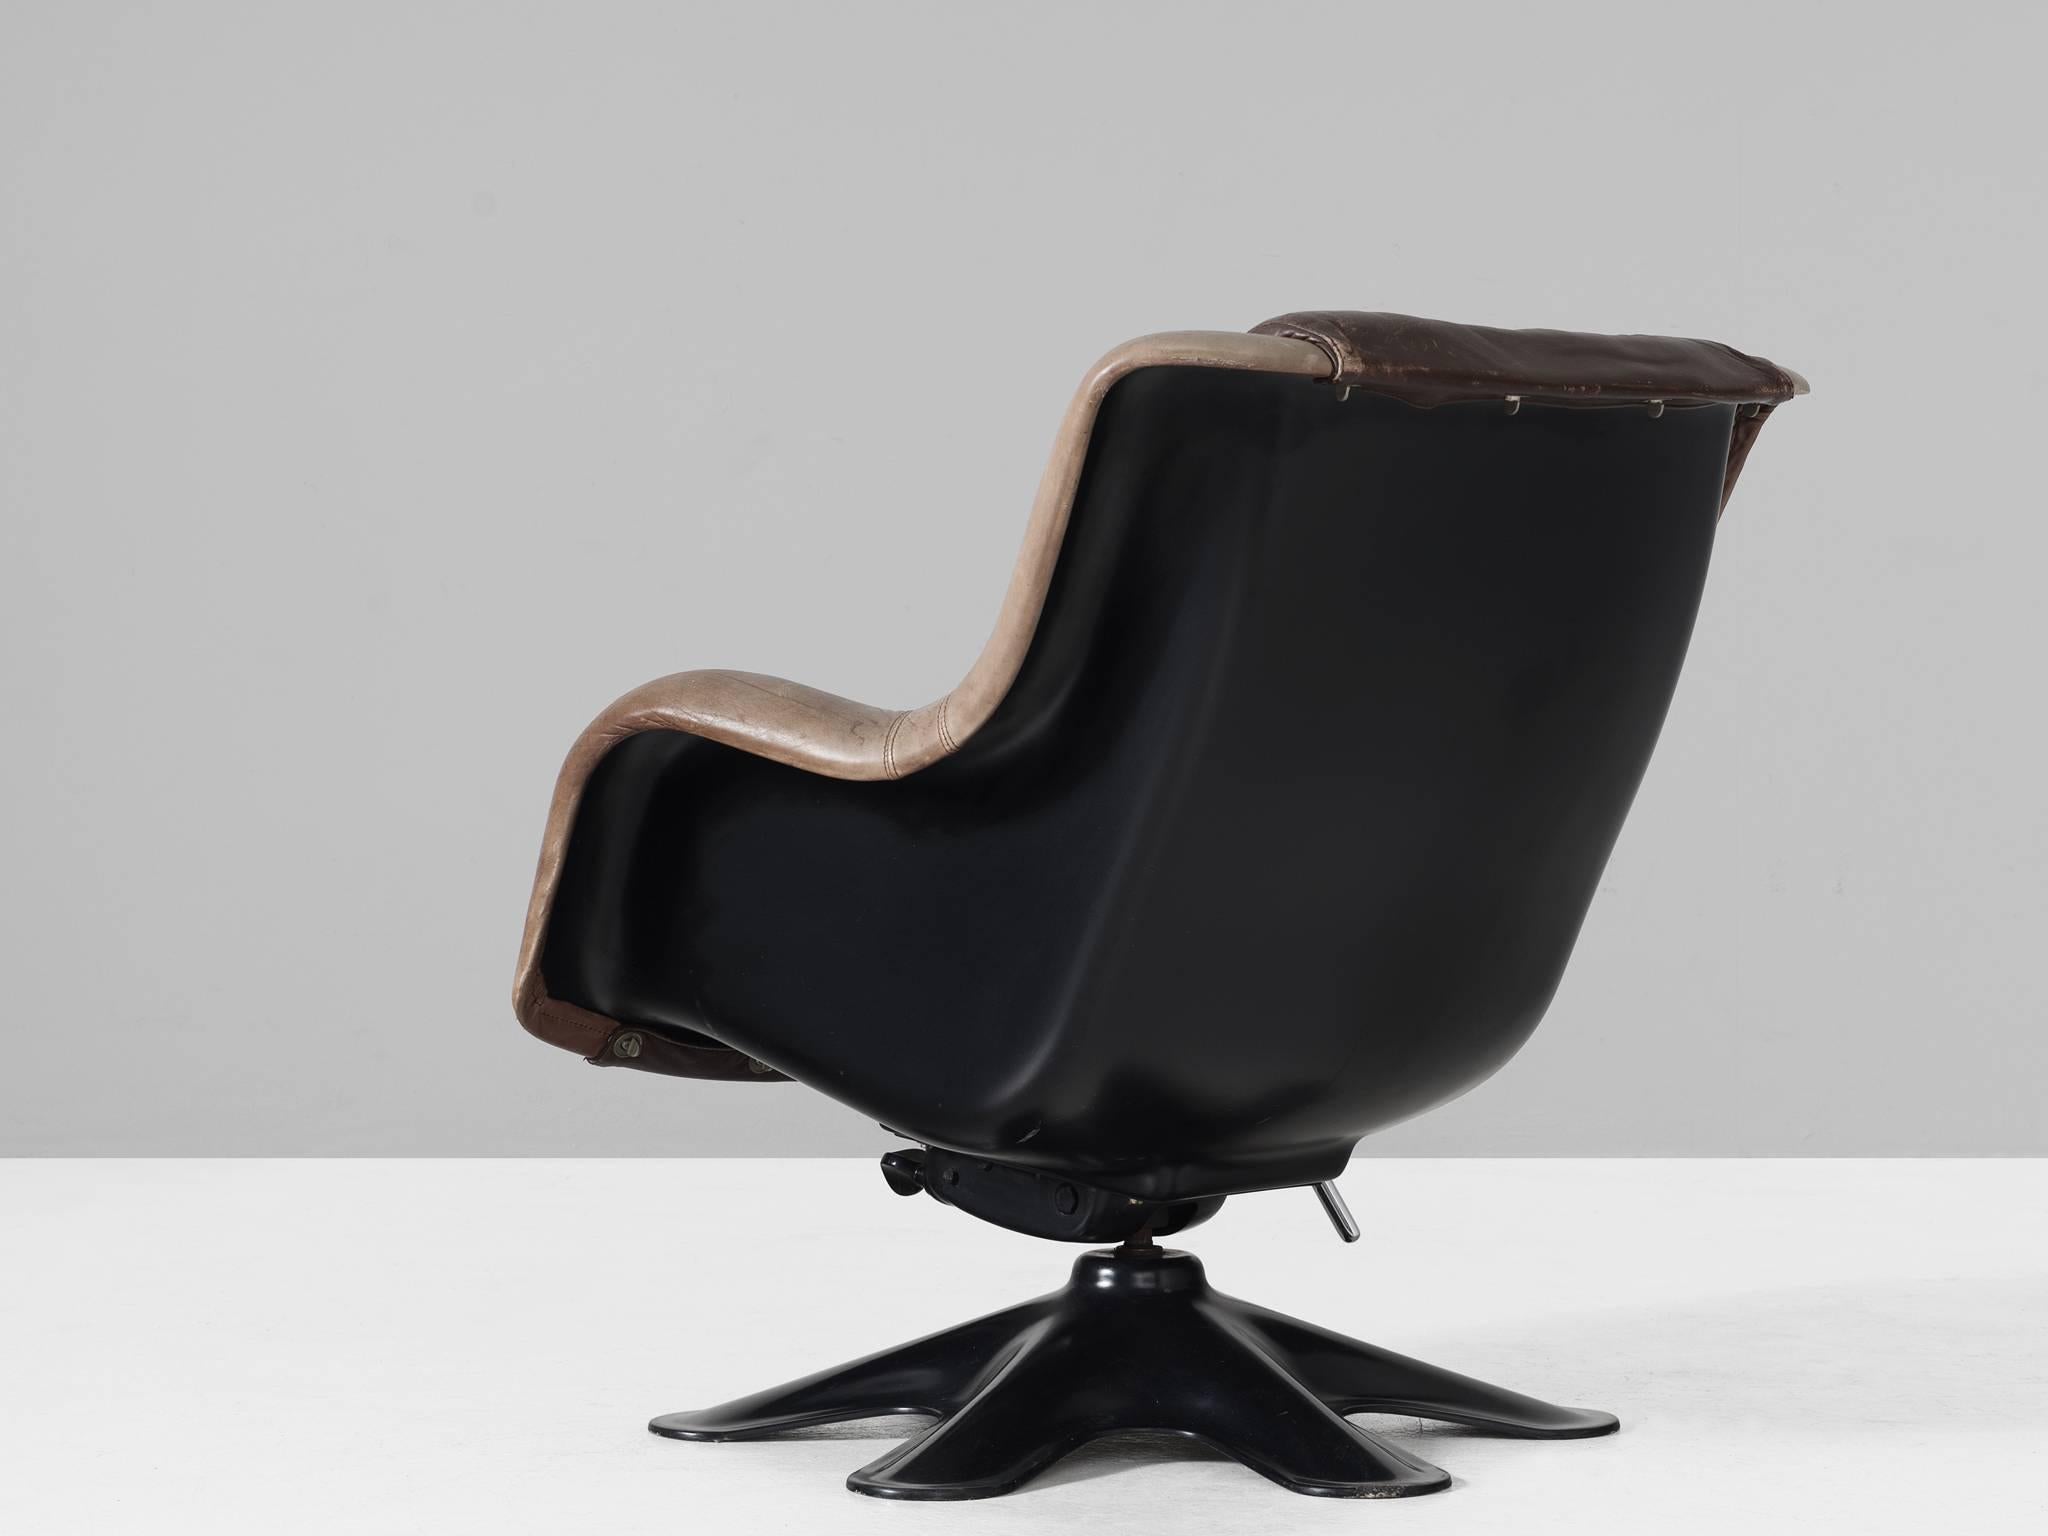 Finnish Yrjo Kukkapuro 'Karuselli' Lounge Chair in Brown Leather Upholstery